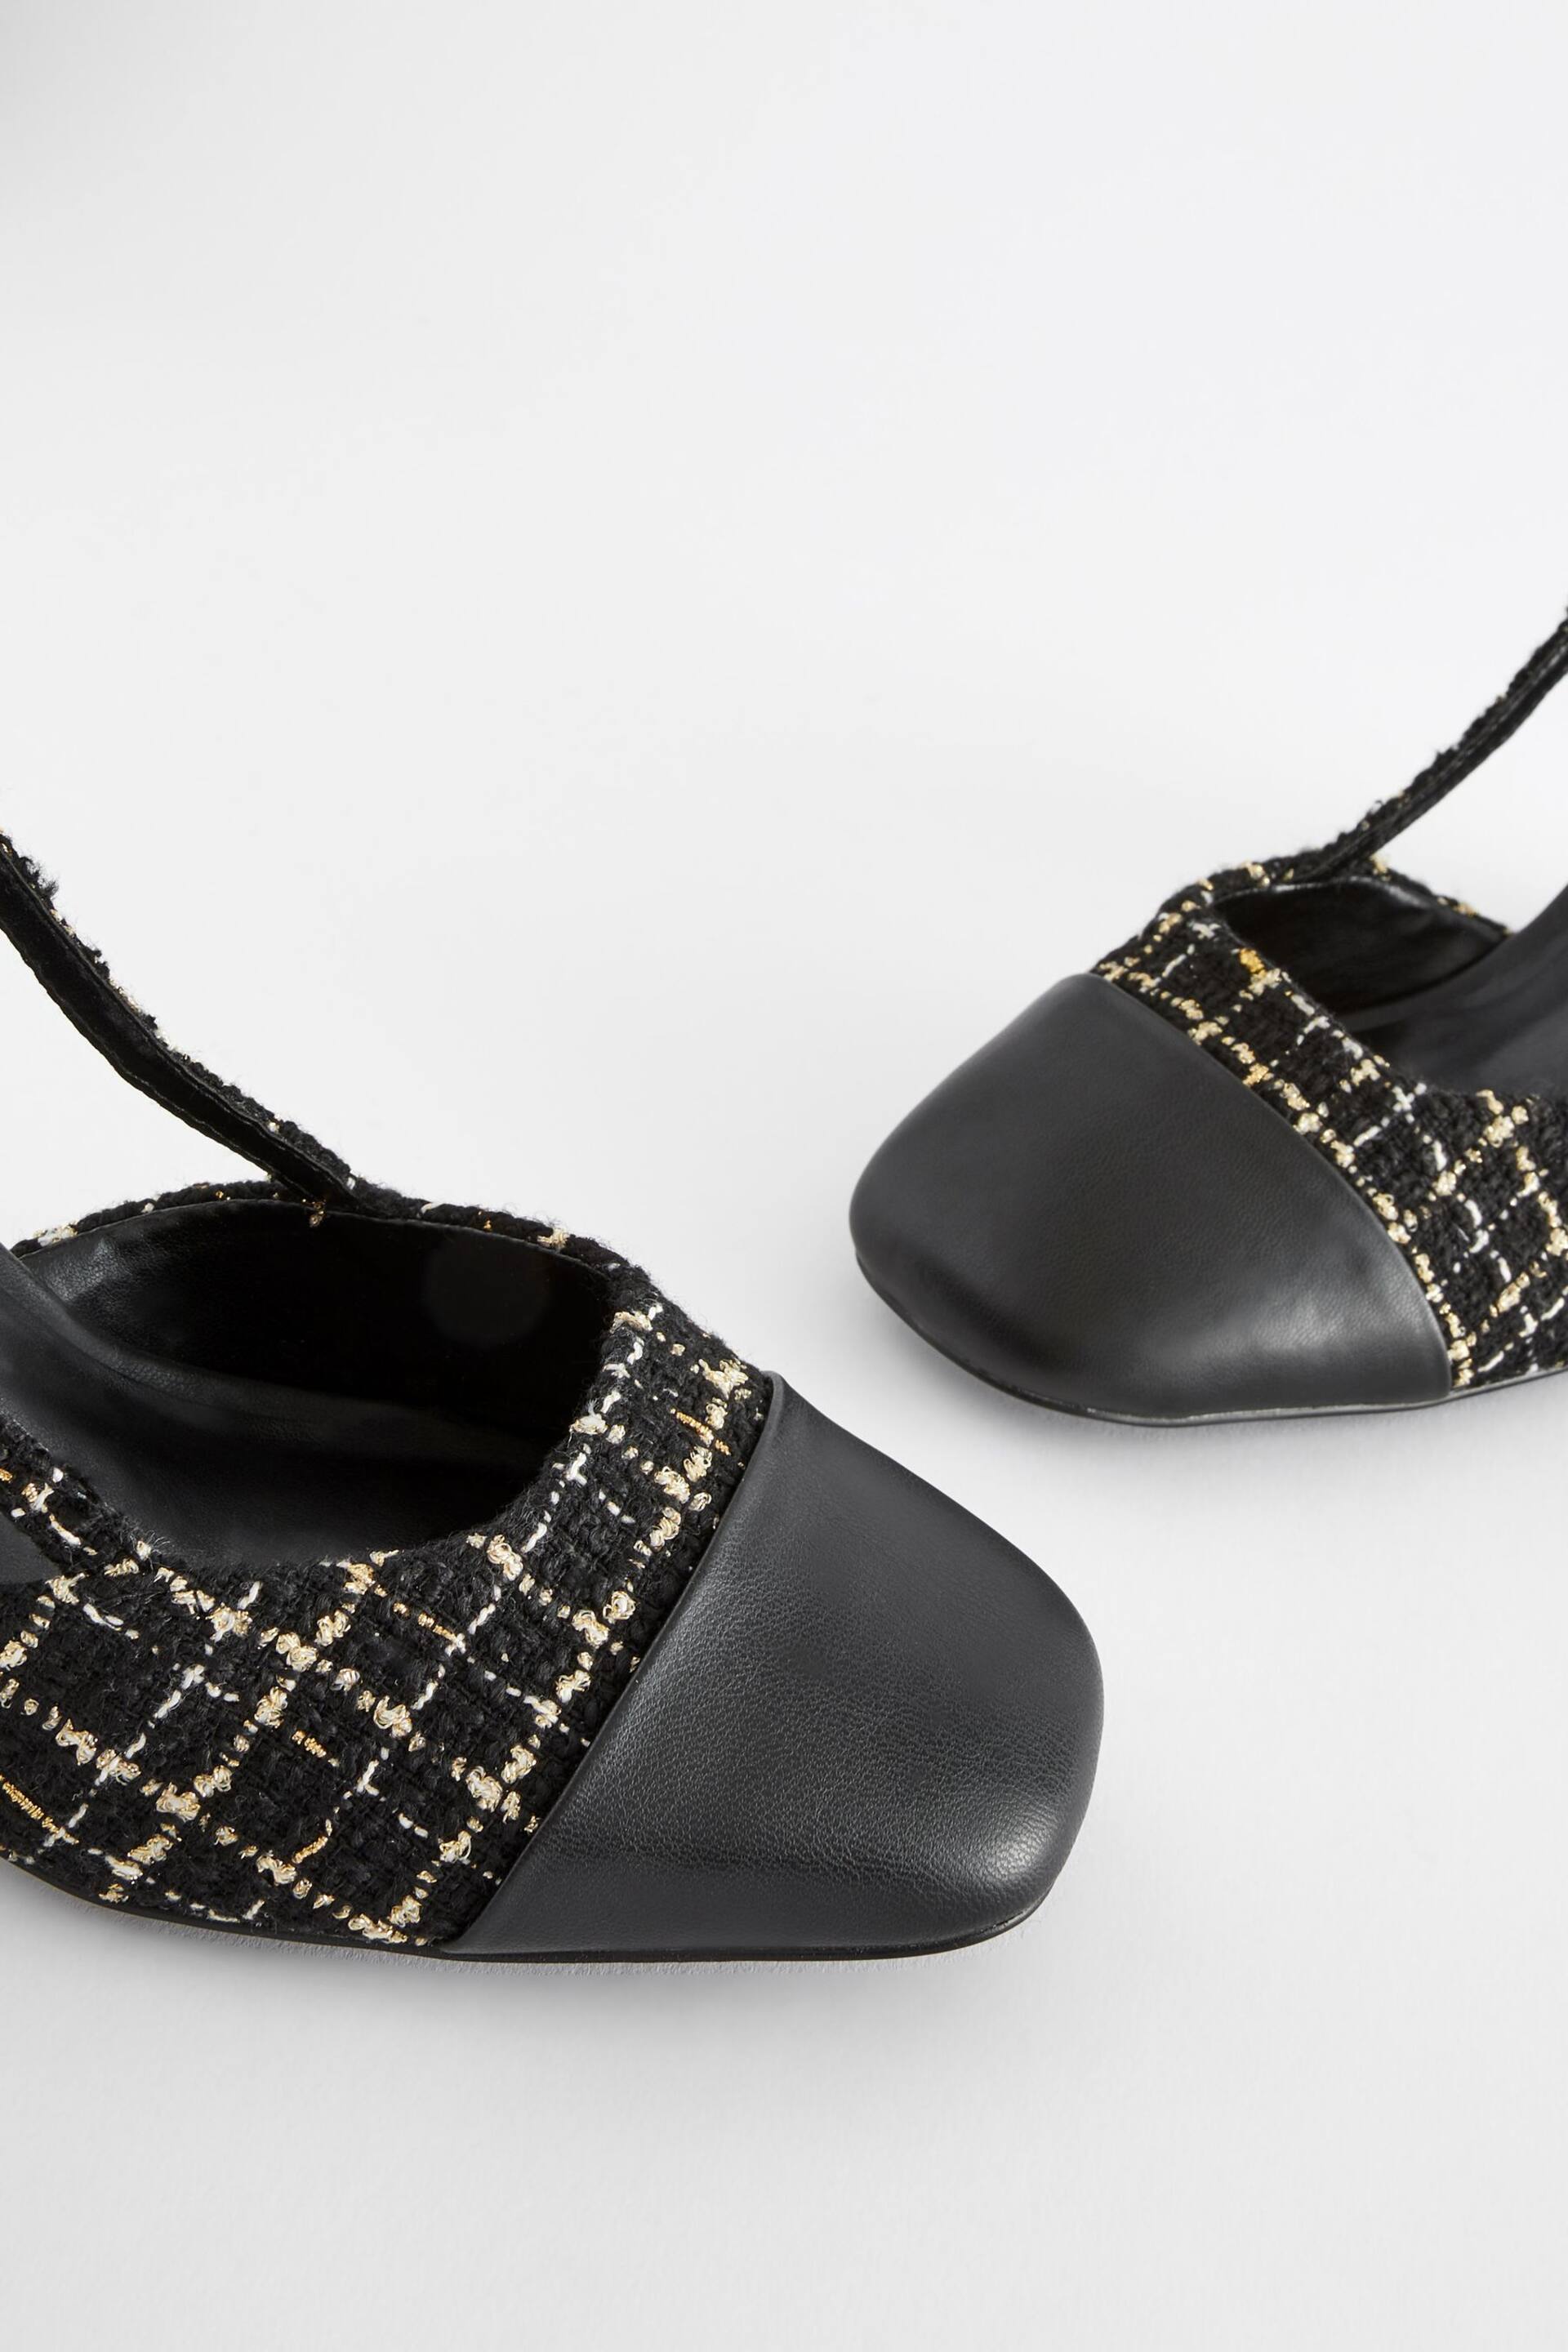 Monochrome Forever Comfort® Square Toe Slingback Block Heel Shoes - Image 8 of 12